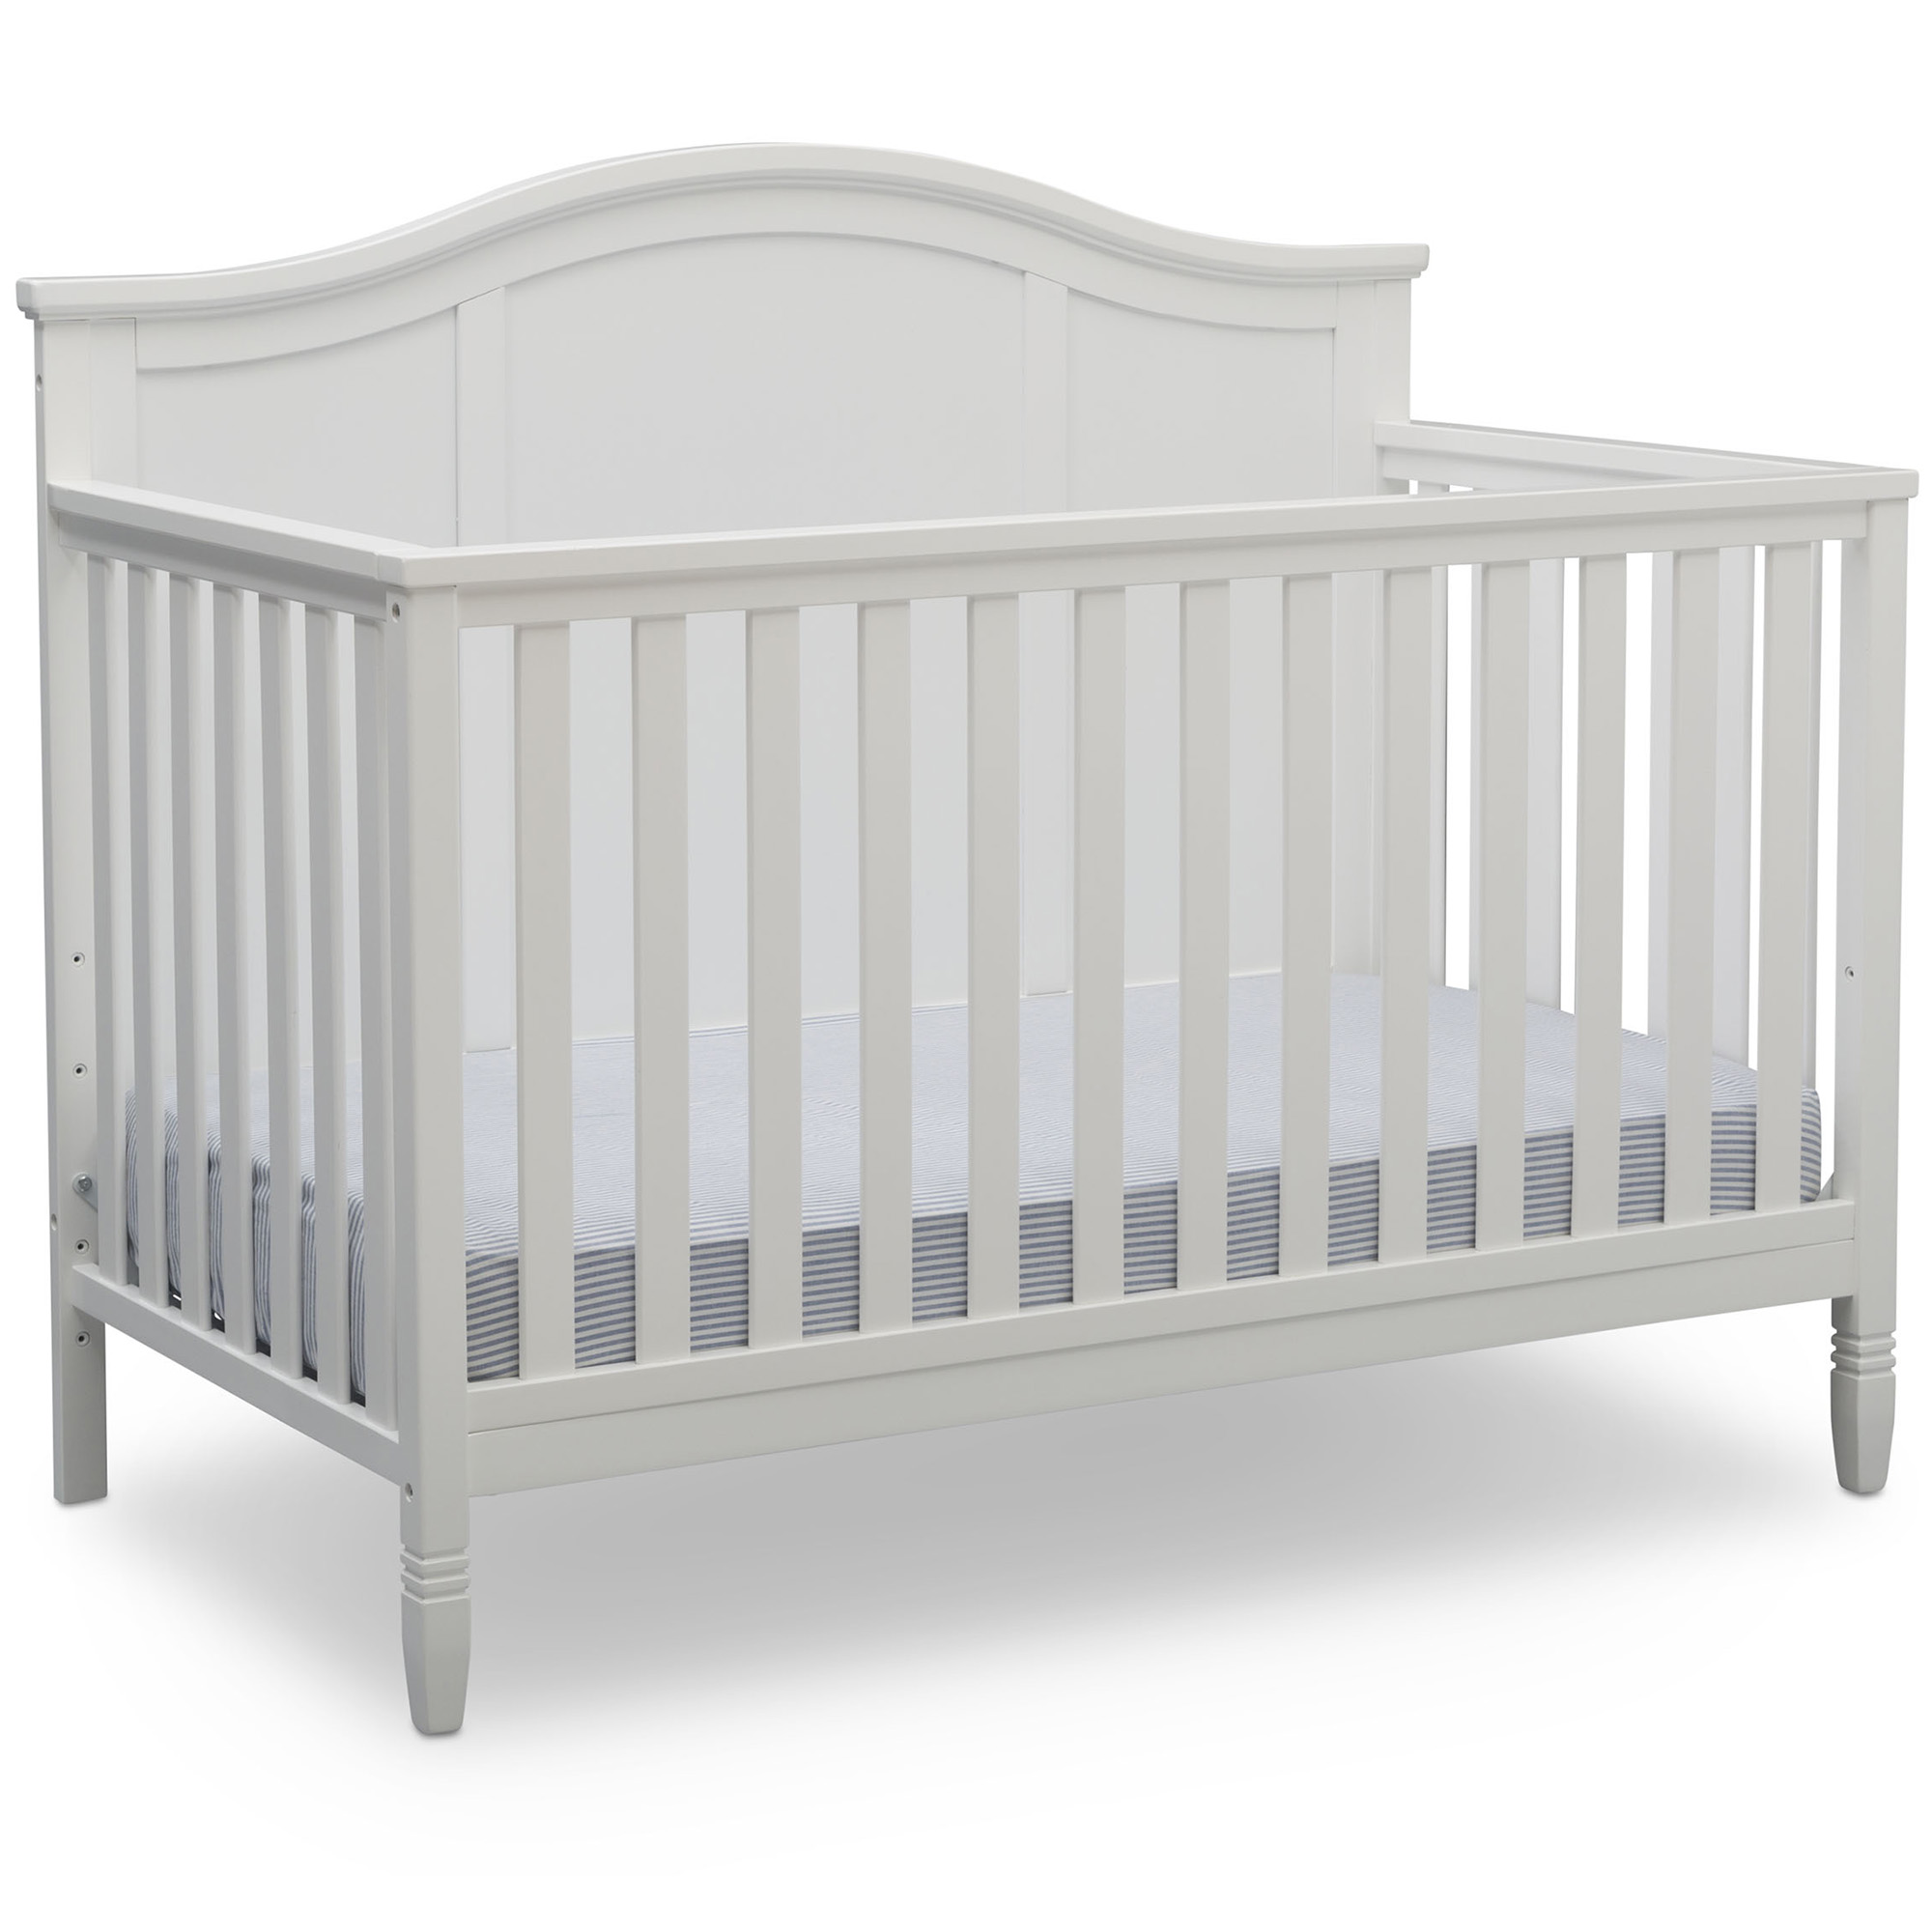 Delta Children Madrid 5-in-1 Convertible Baby Crib, Bianca White - image 1 of 11